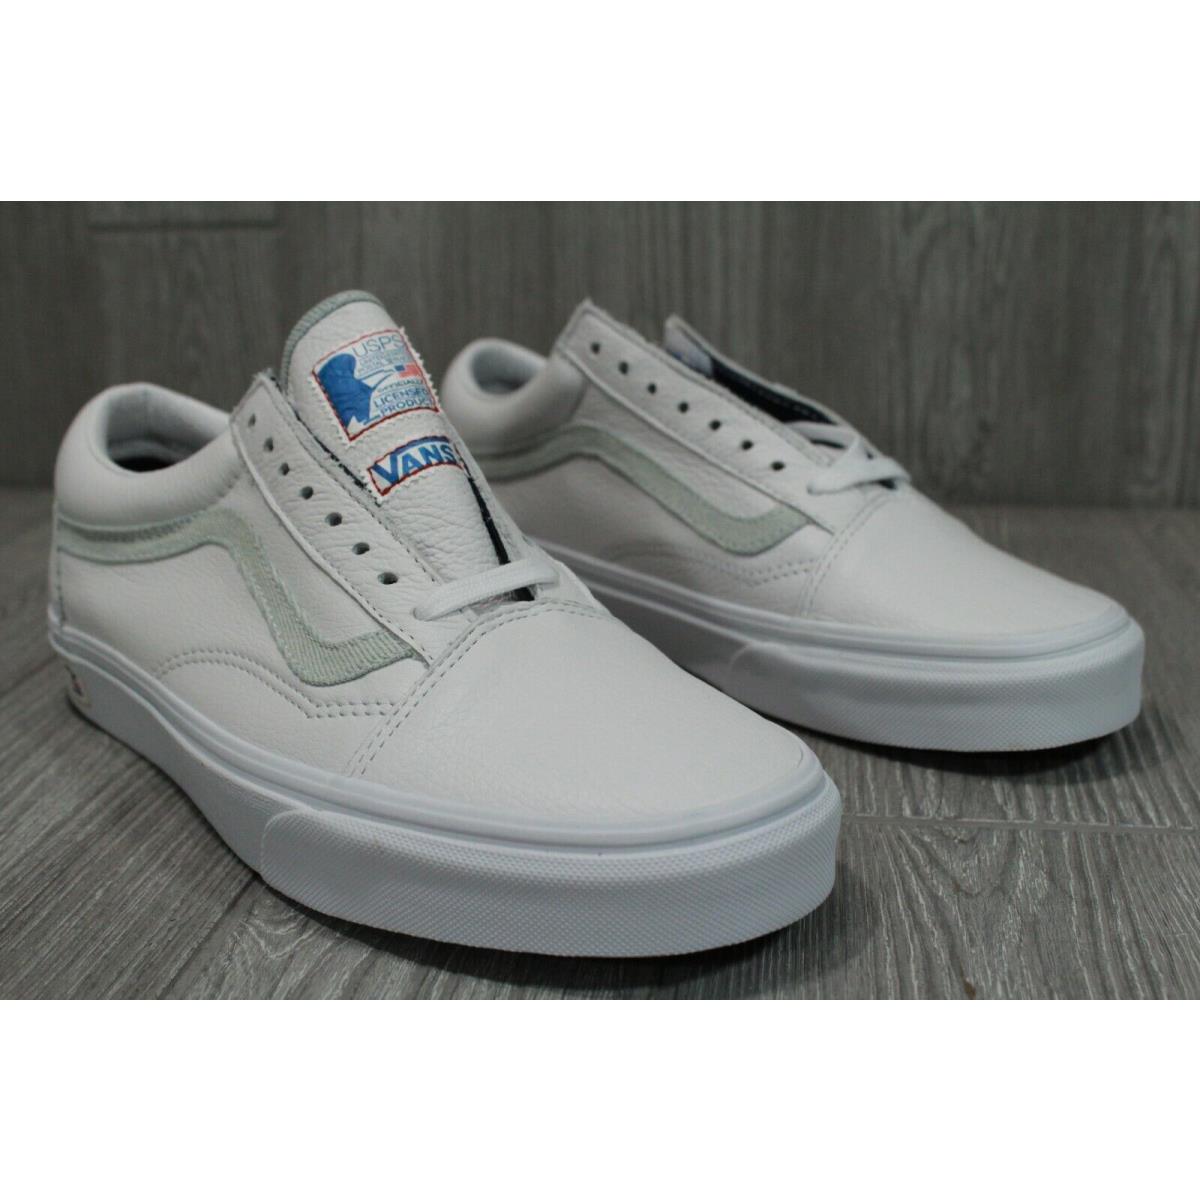 Vans Usps Priority Mail Old Skool Leather Skate Shoes Mens Size 9  12 |  068031351805 - Vans shoes USPS - White | SporTipTop